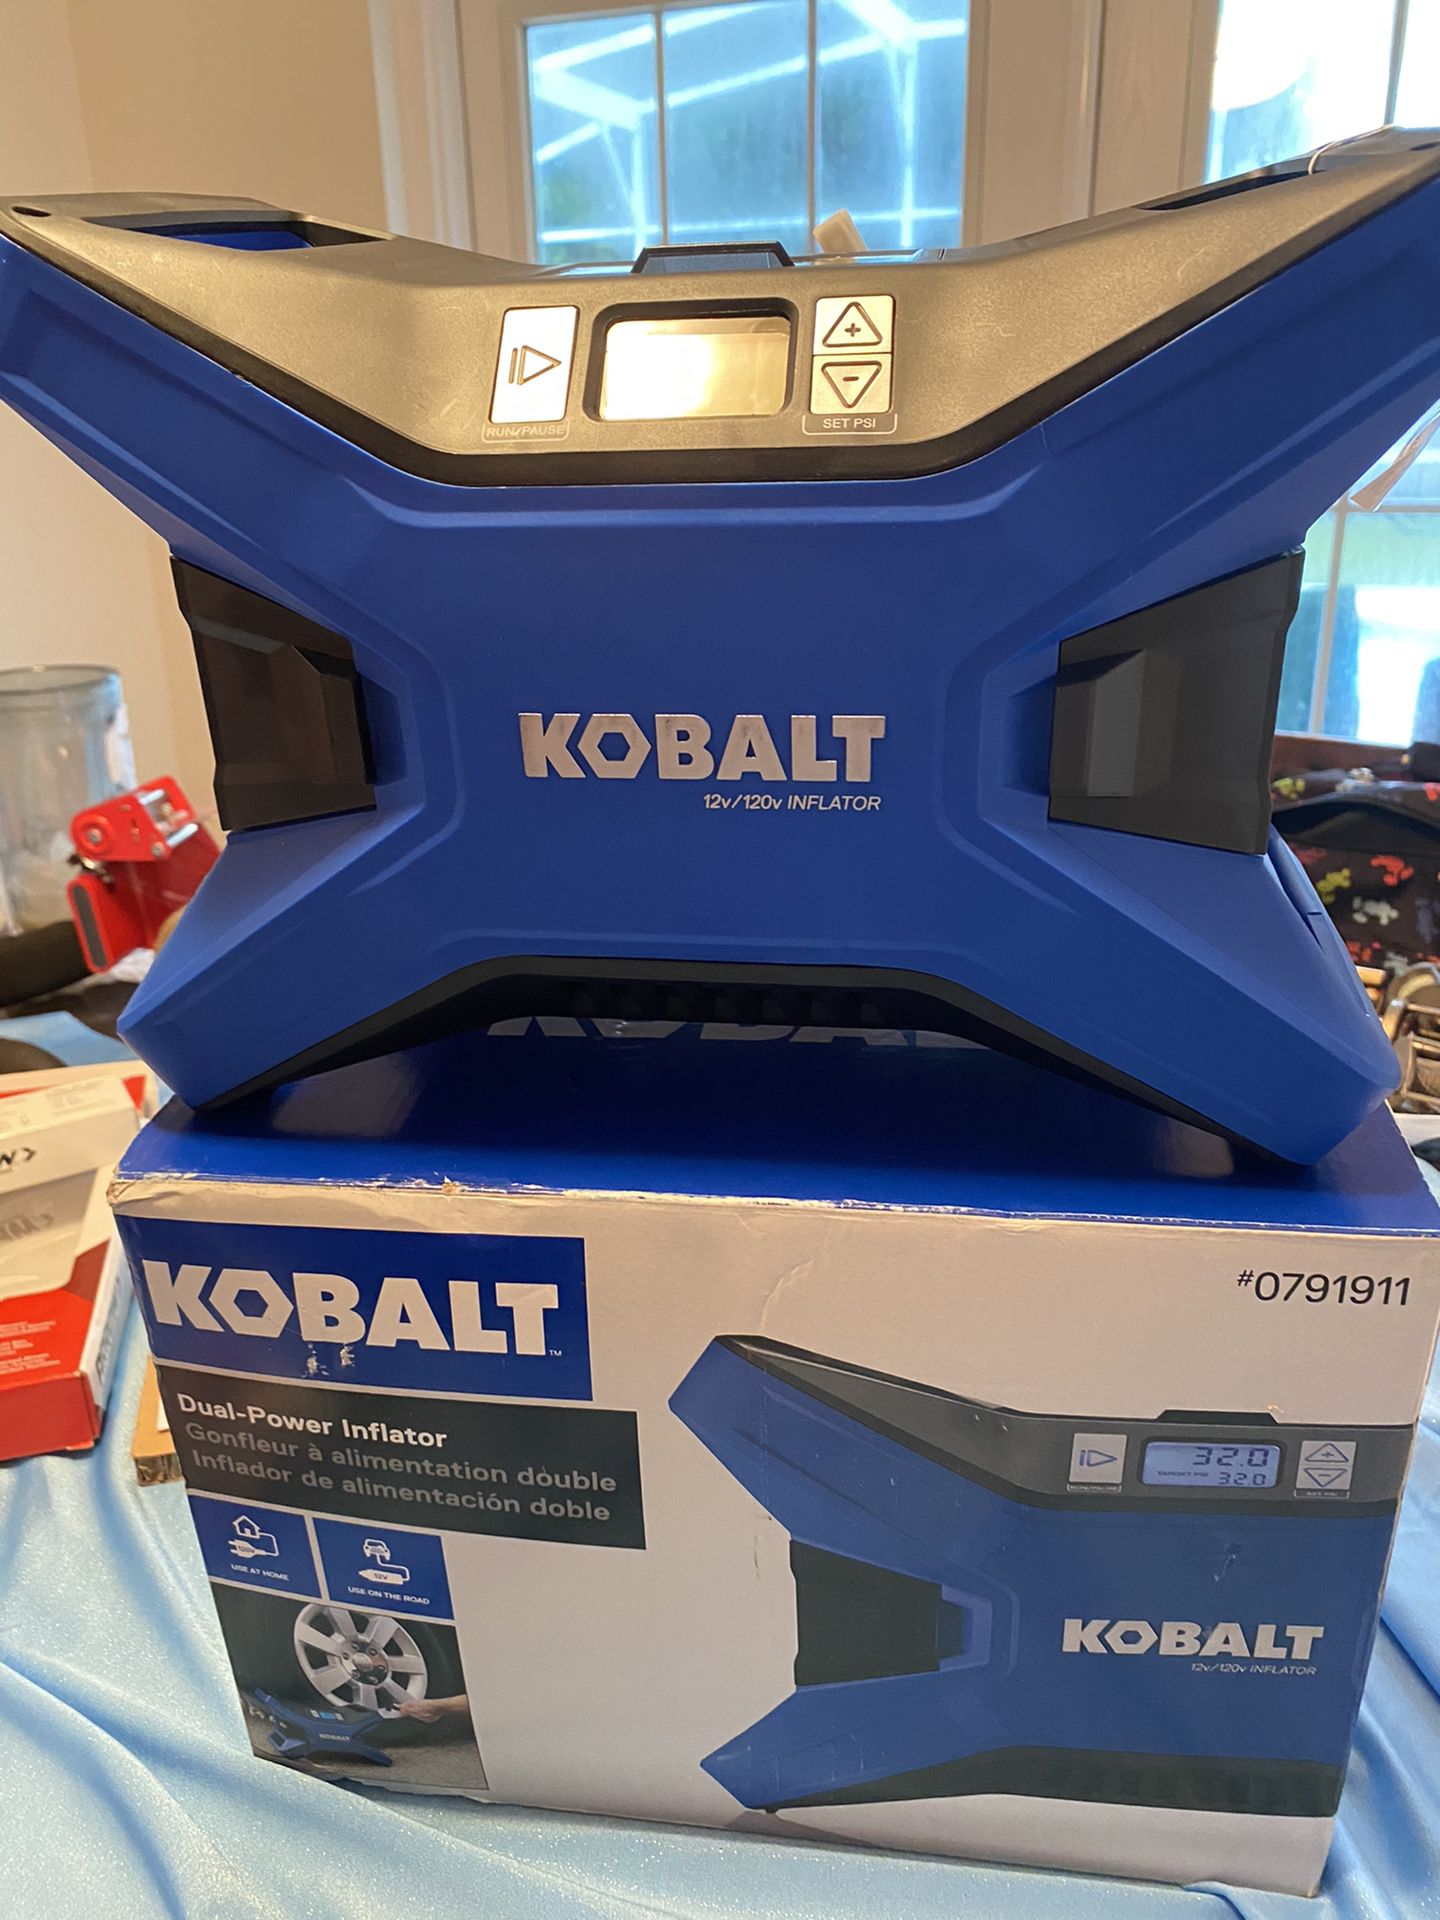 Kobalt portable air compressor